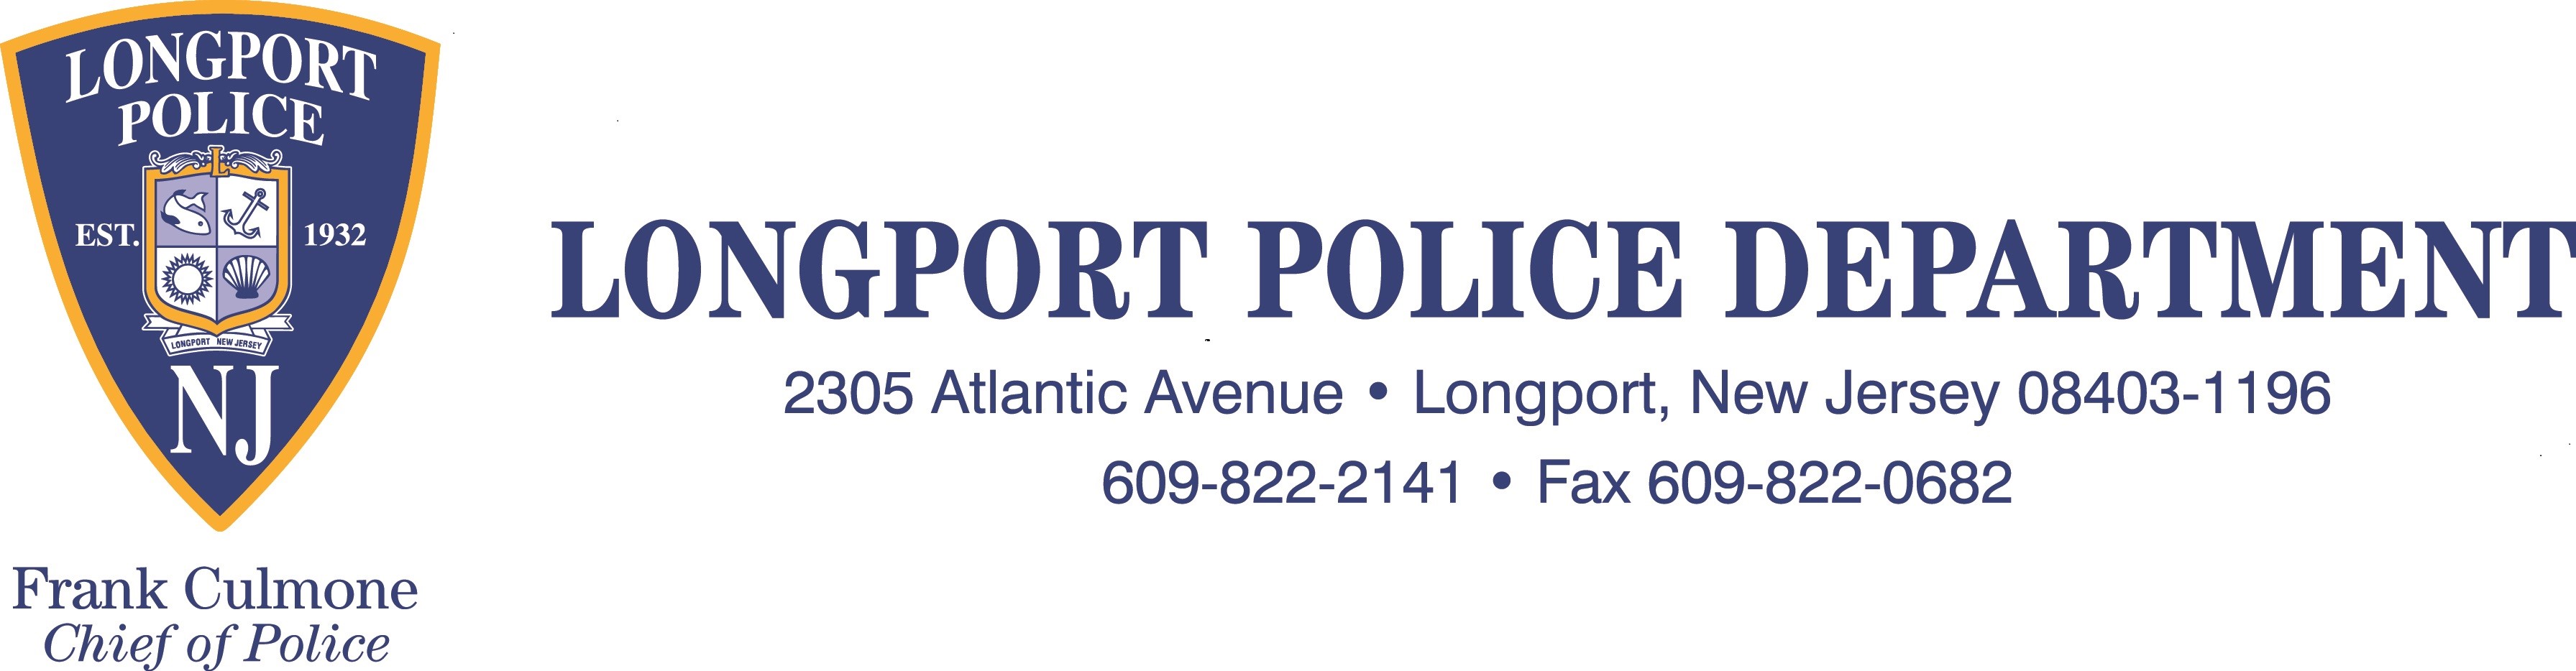 Longport Police Department, NJ 